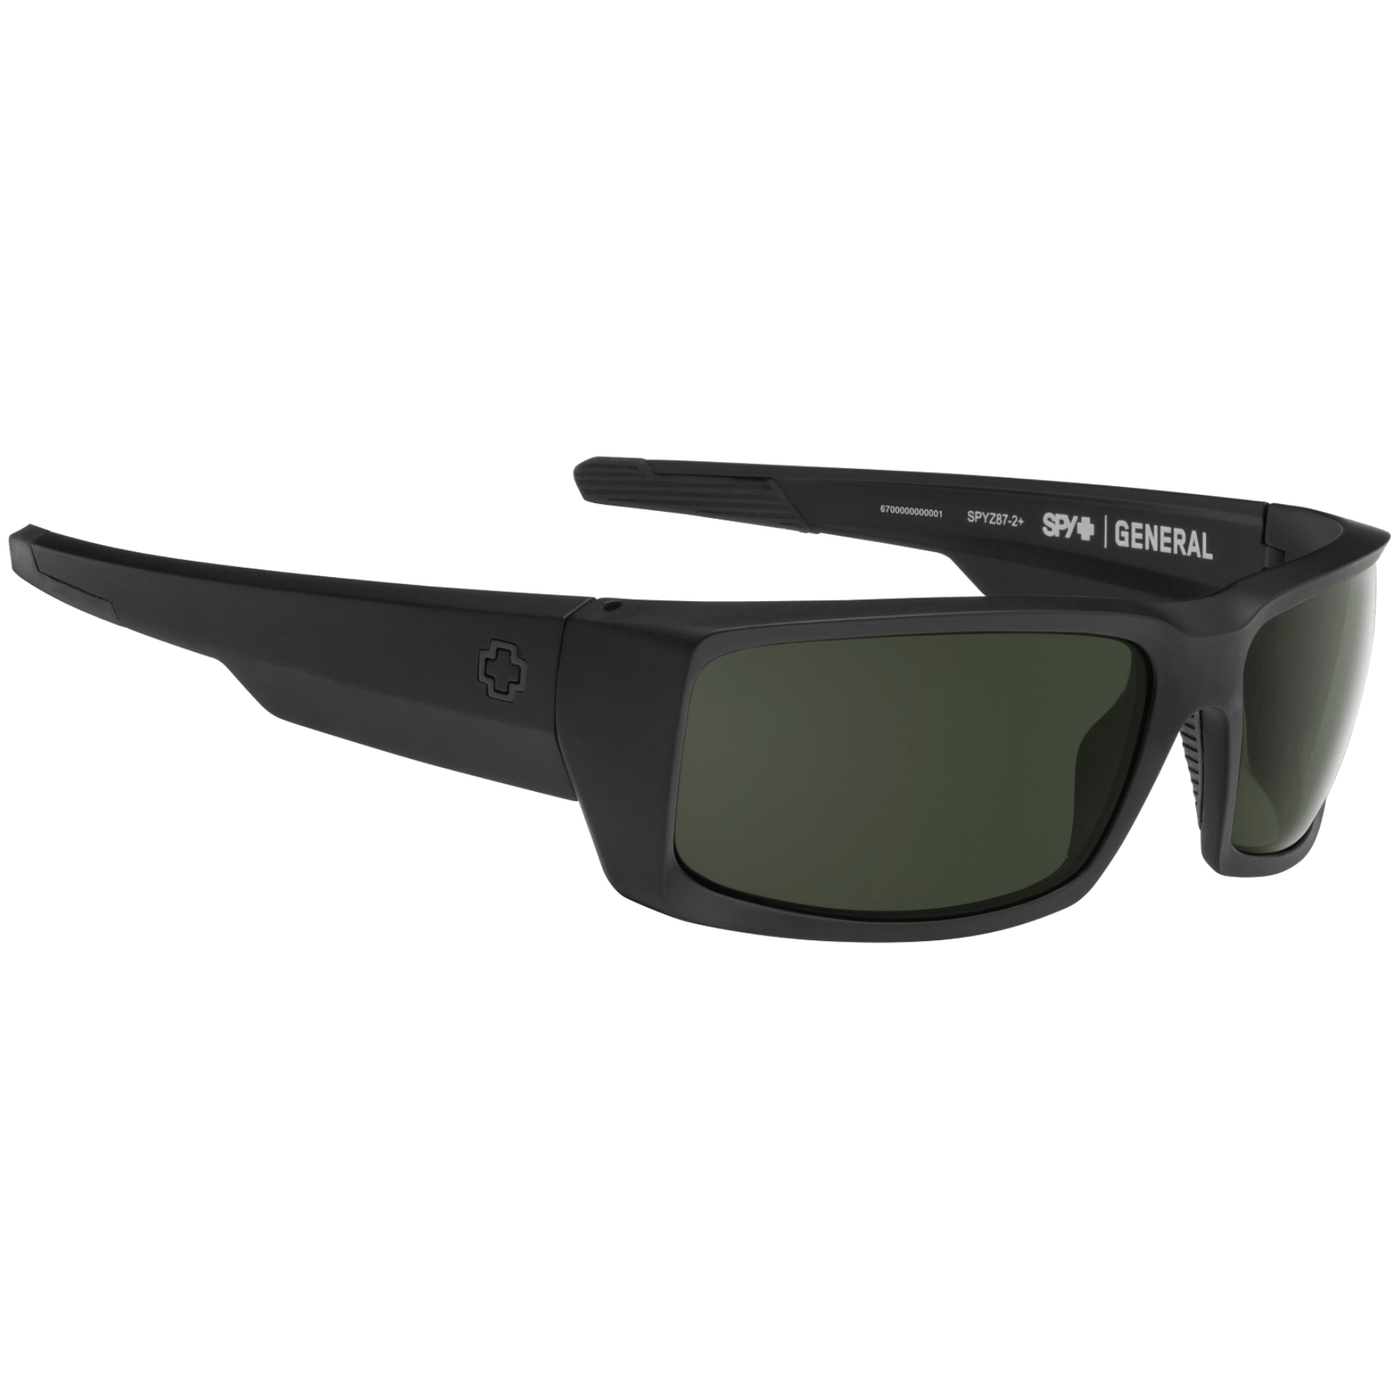 SPY GENERAL Sunglasses, ANSI Z87.1 - Matte Black 8Lines Shop - Fast Shipping